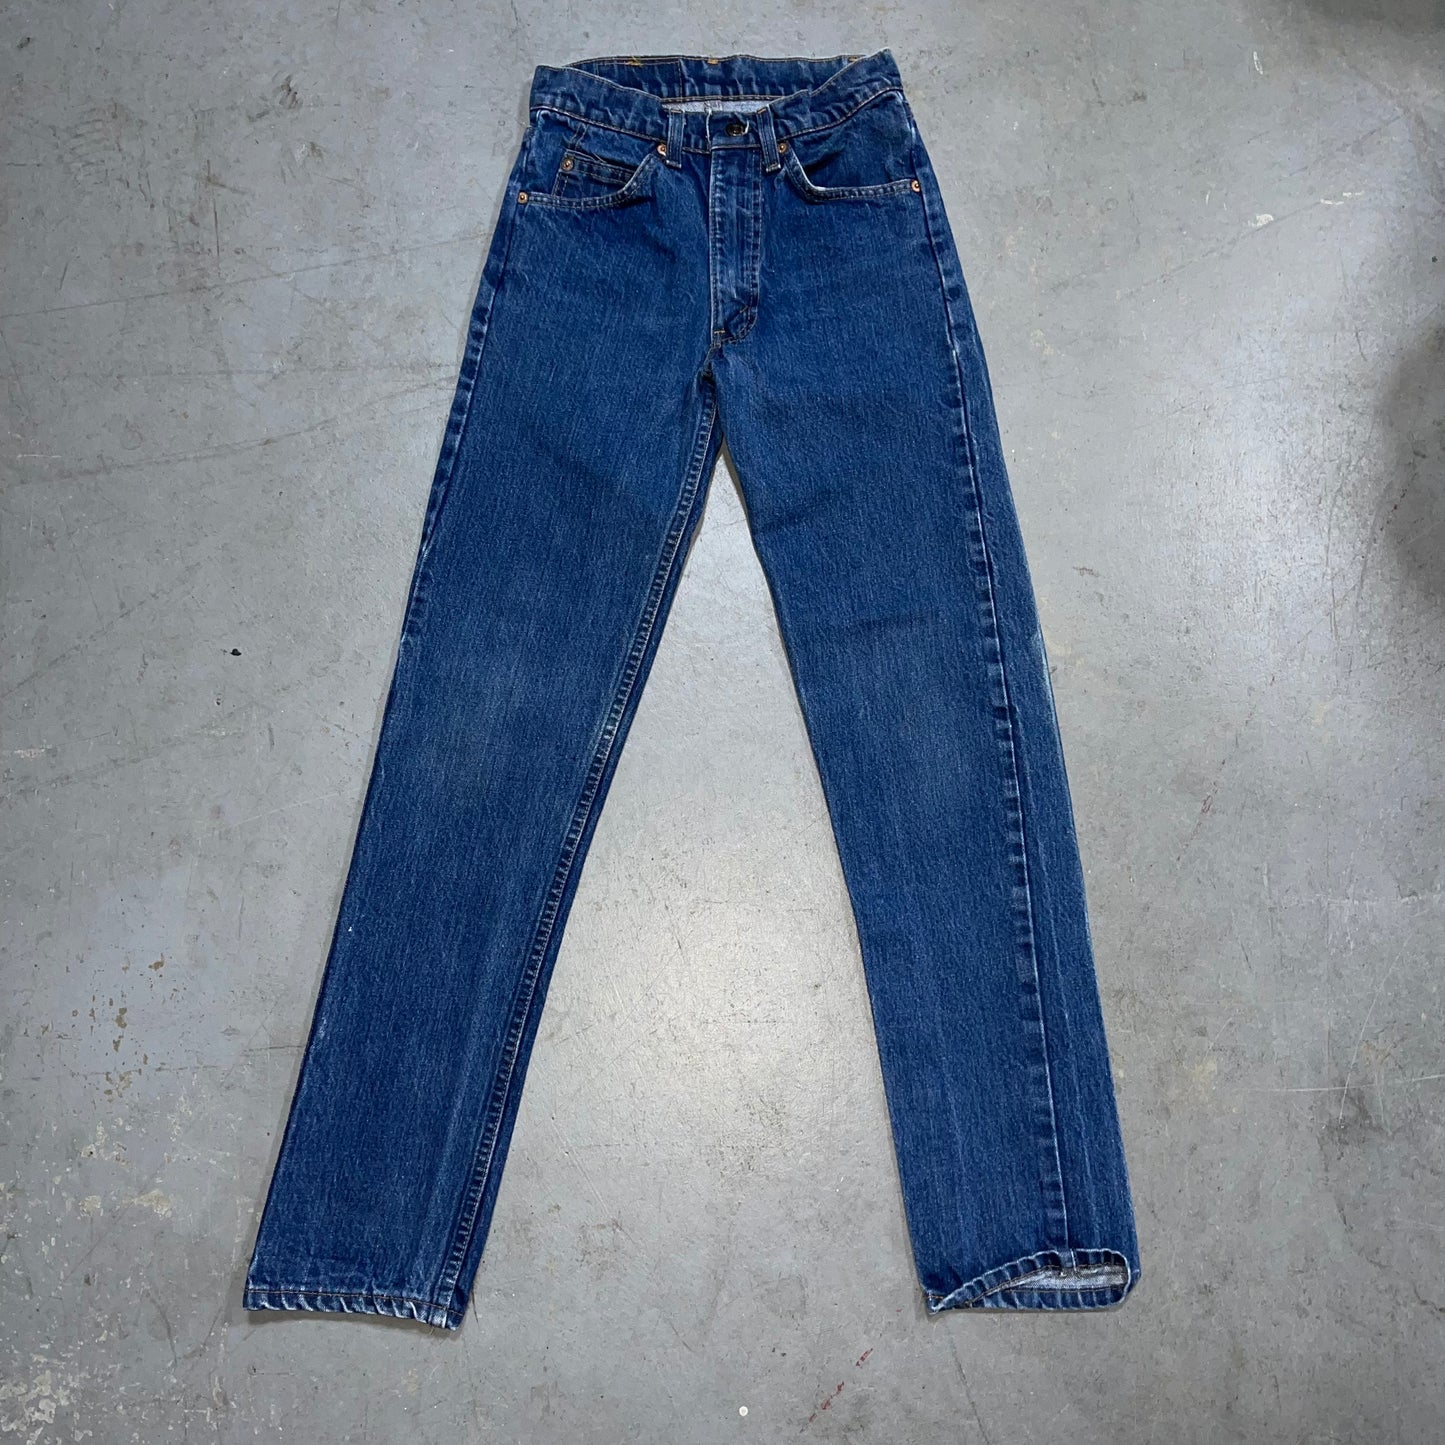 Vintage Levi’s 20505 0217 Orange Tab Jeans. Size 27 x 32